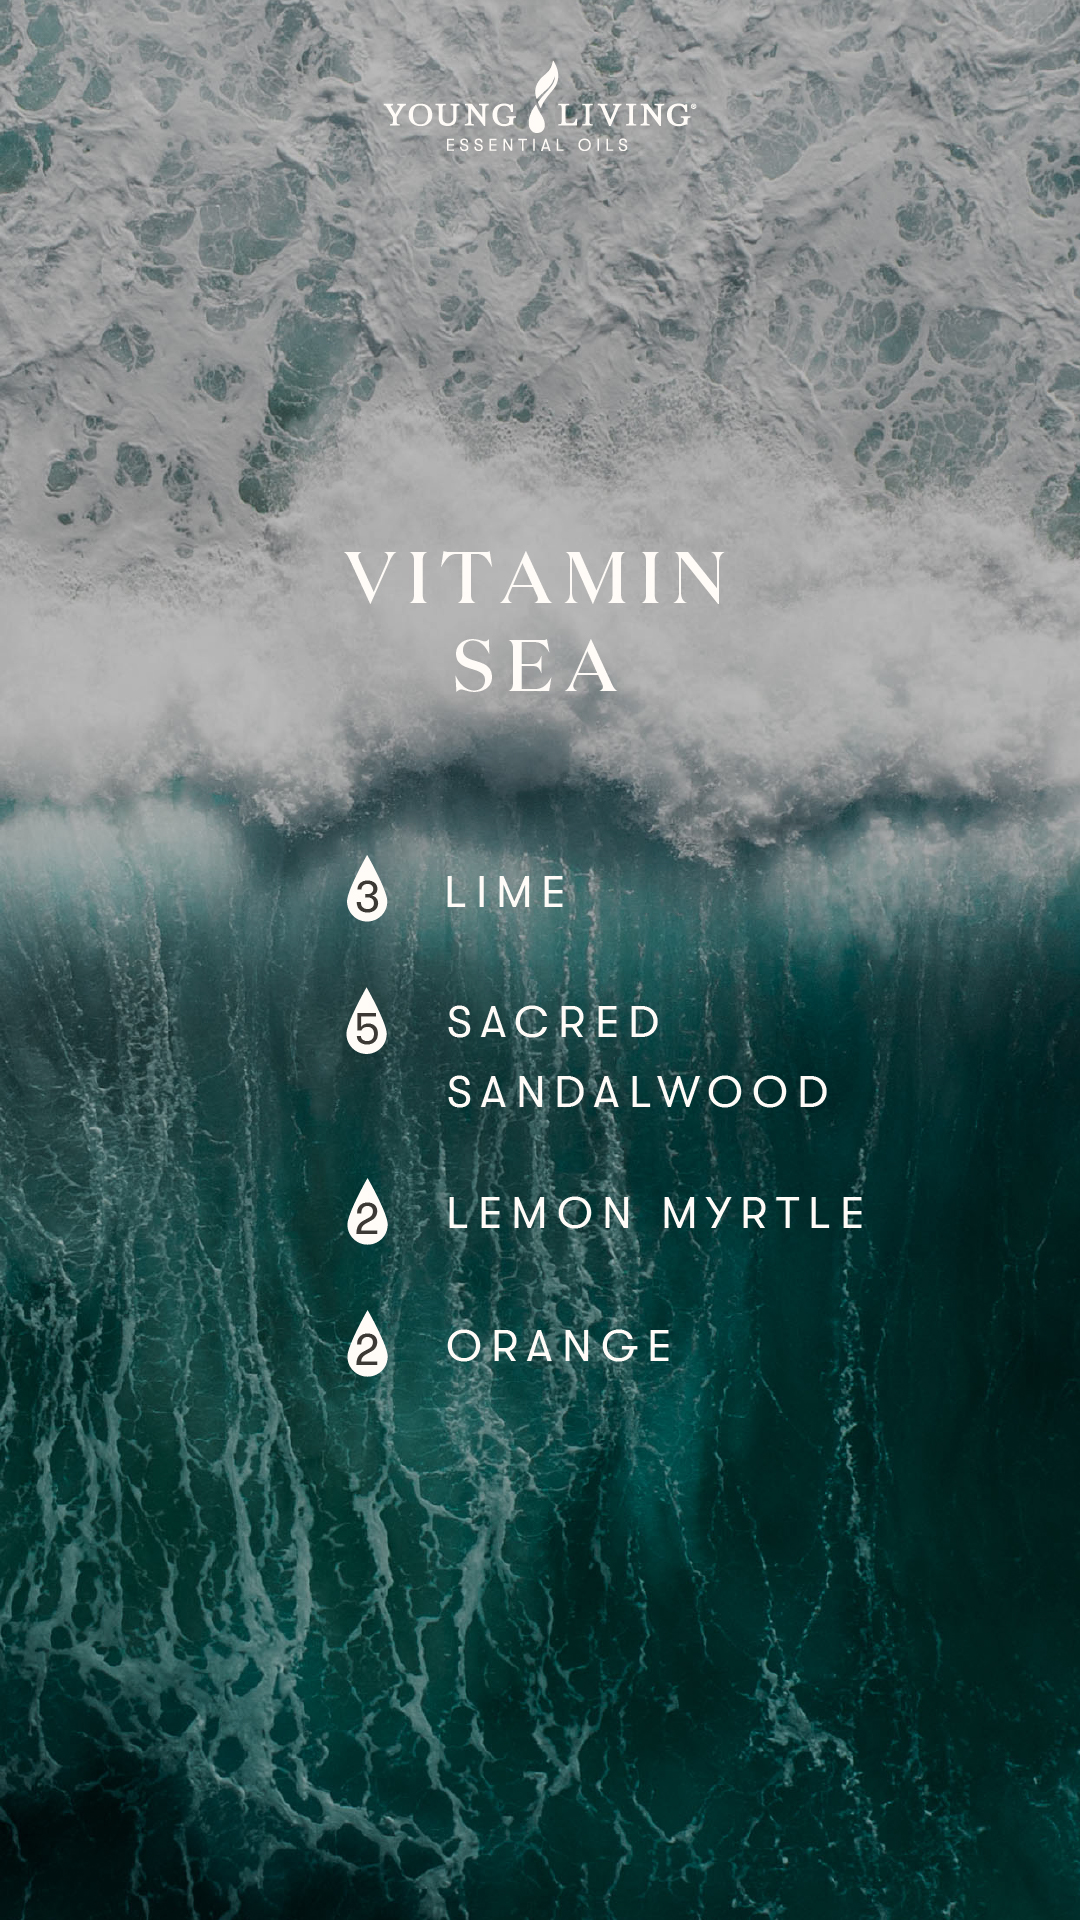 Vitamin sea summer diffuser blend